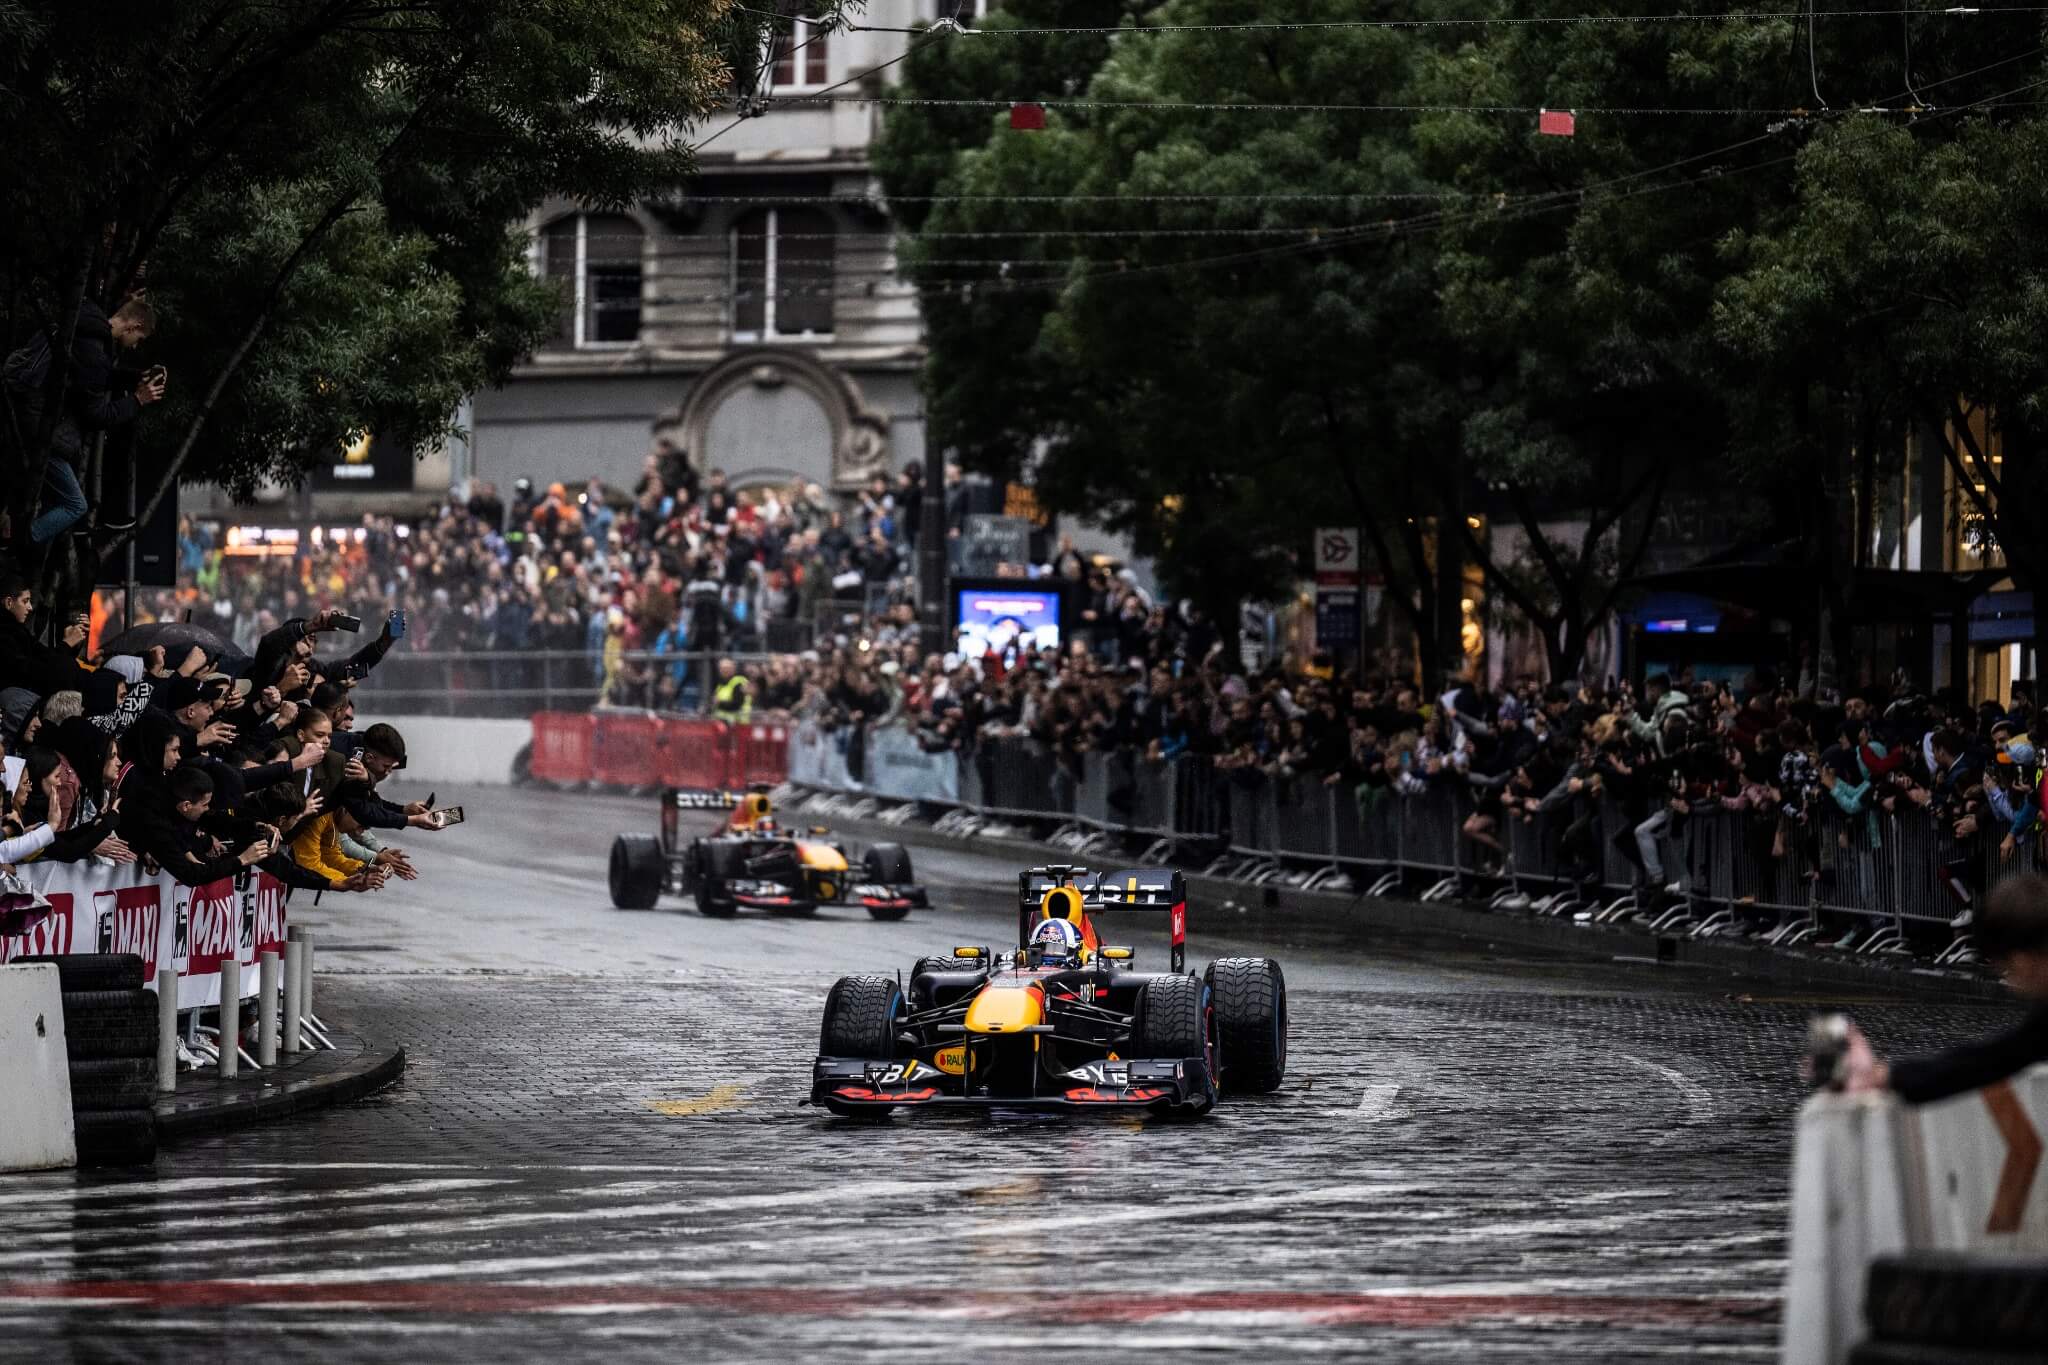 Red Bull Showrun Fórmula 1